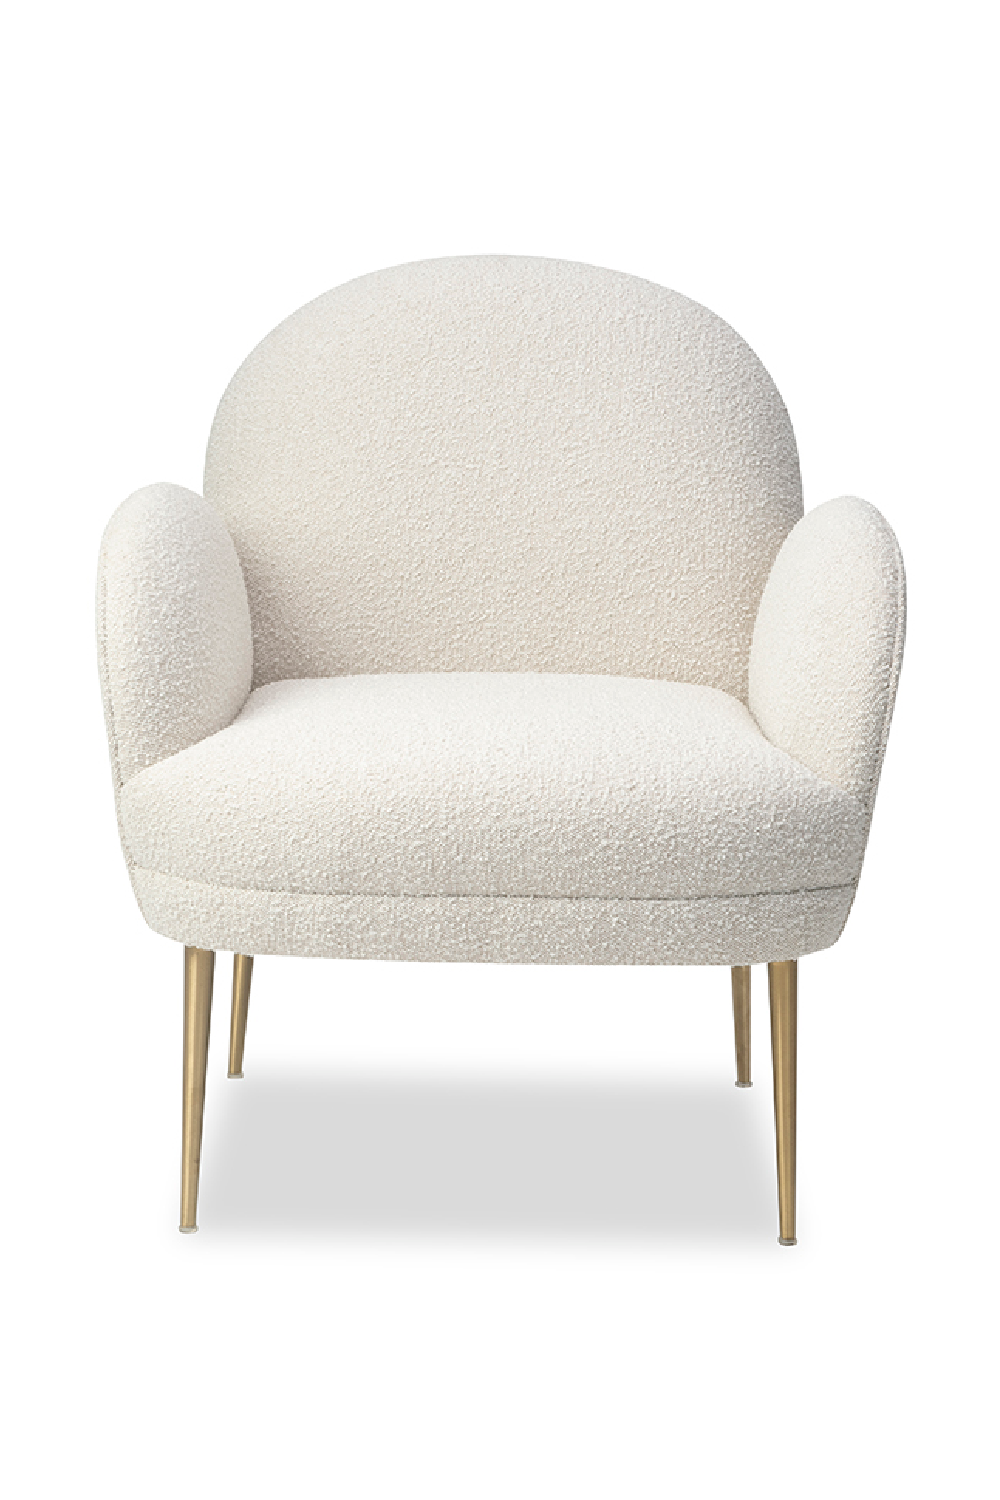 White Bouclé Accent Chair | Liang & Eimil Gil | OROA.com